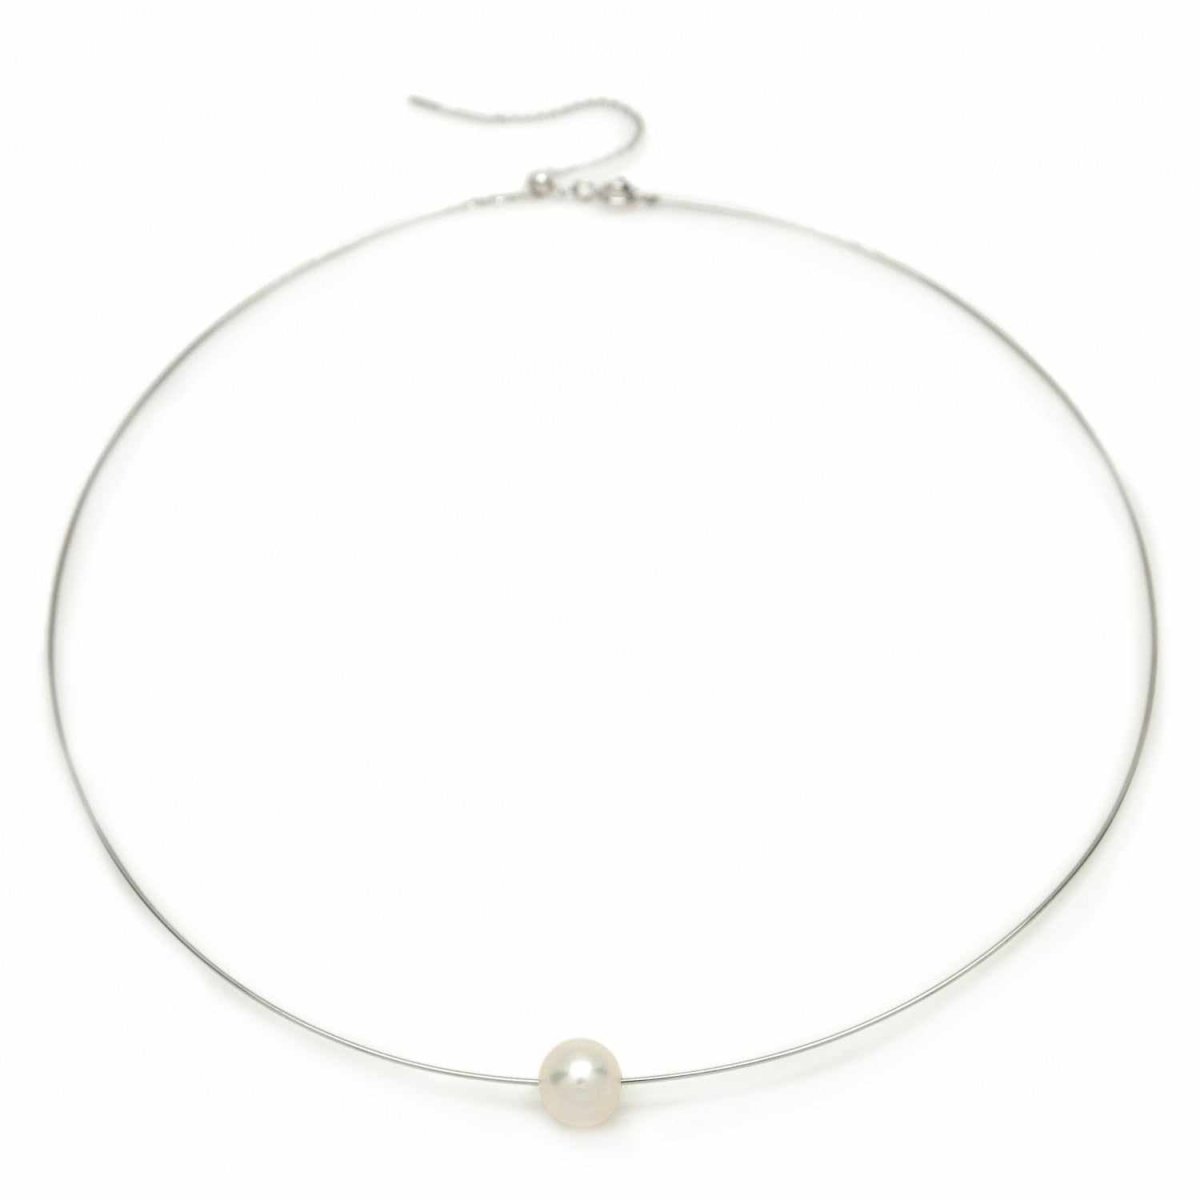 Necklace - Silver pearls pendant with rigid design